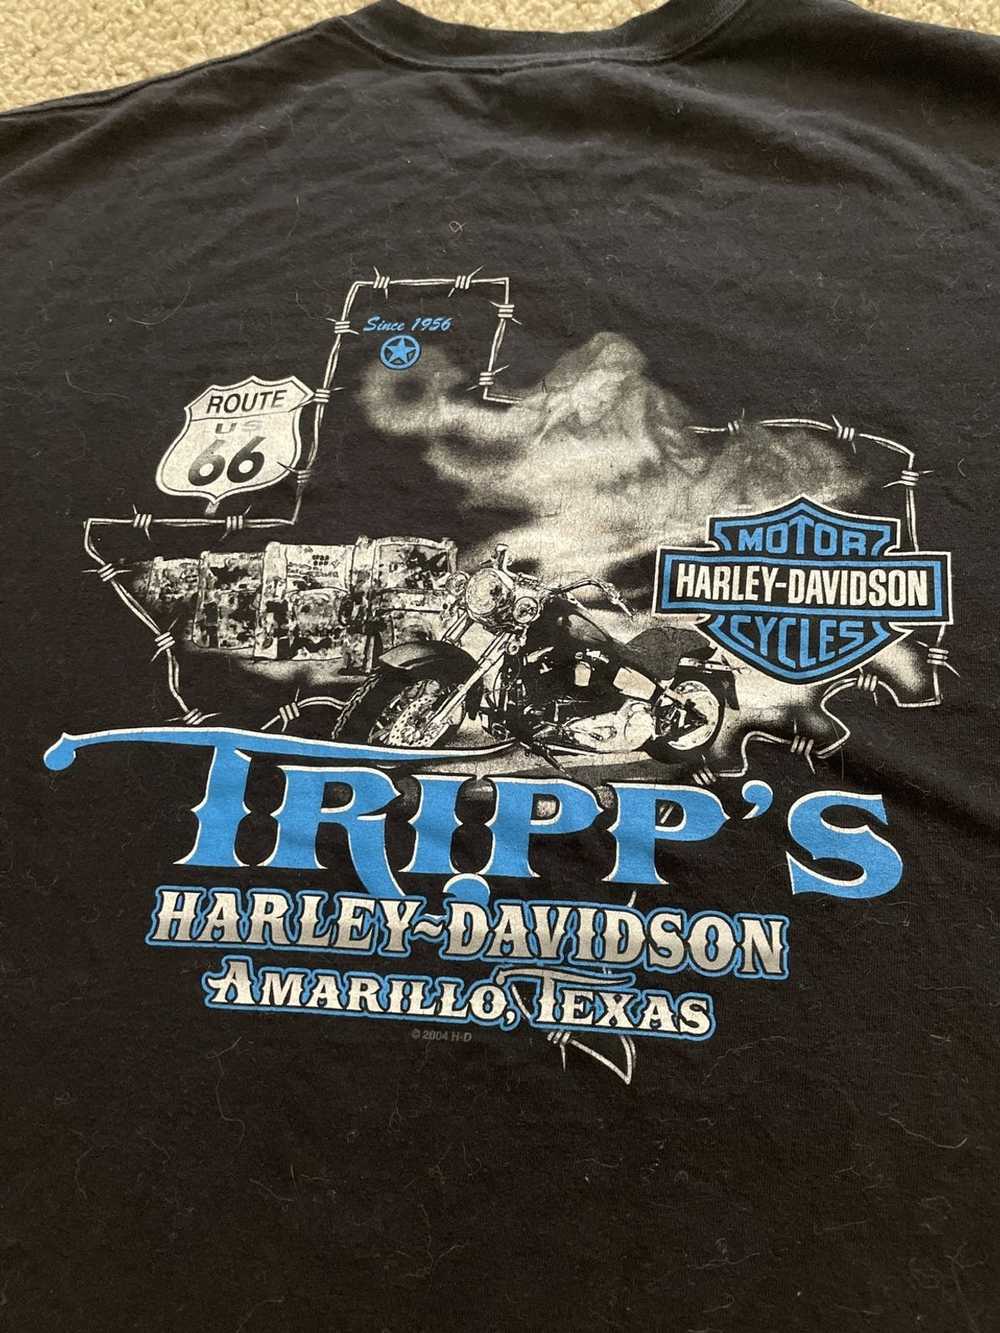 Harley Davidson Harley Davidson - image 5